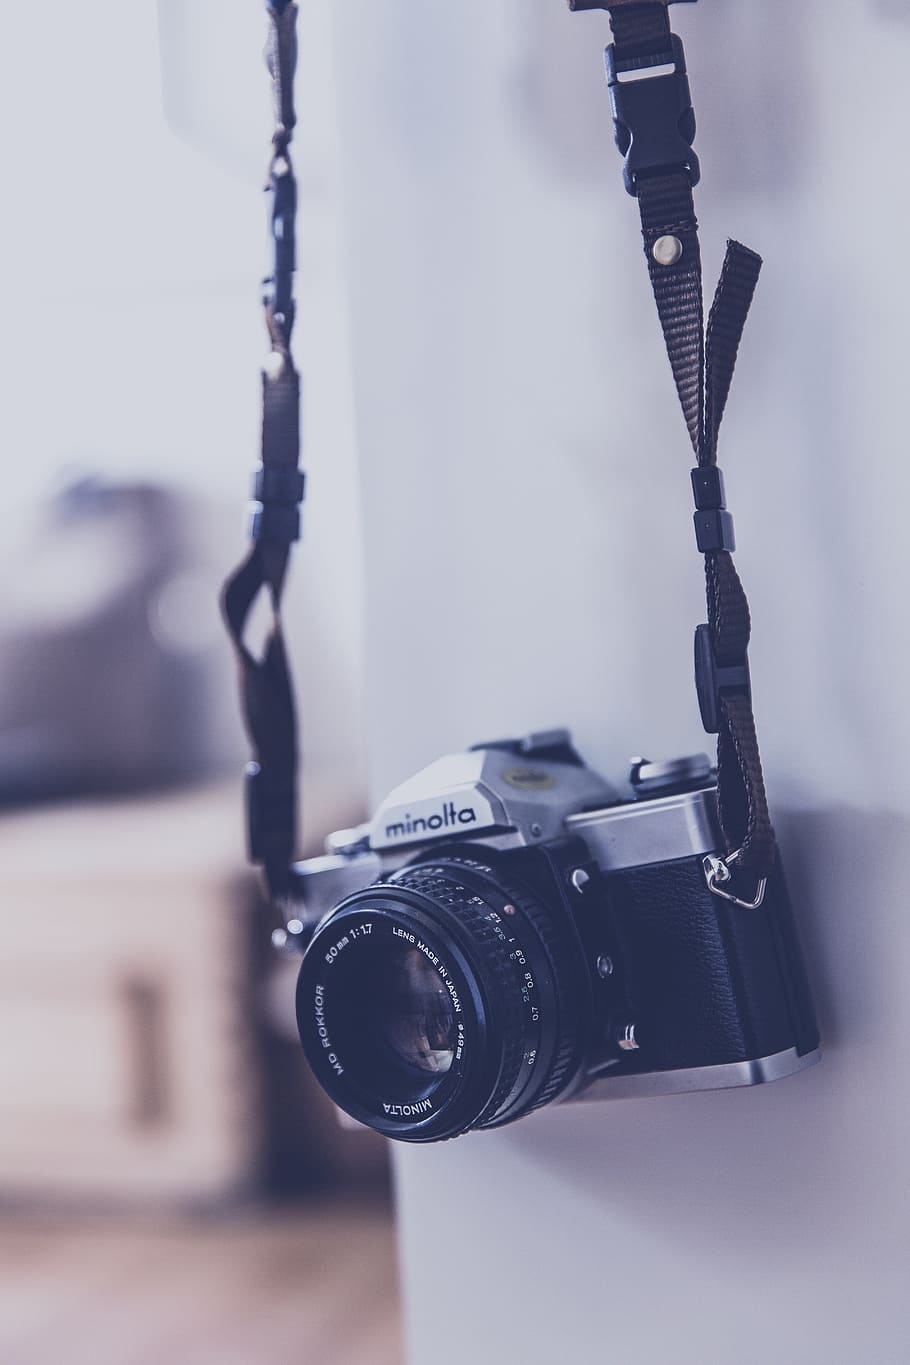 HD wallpaper: hanging black and gray Minolta camera, analog